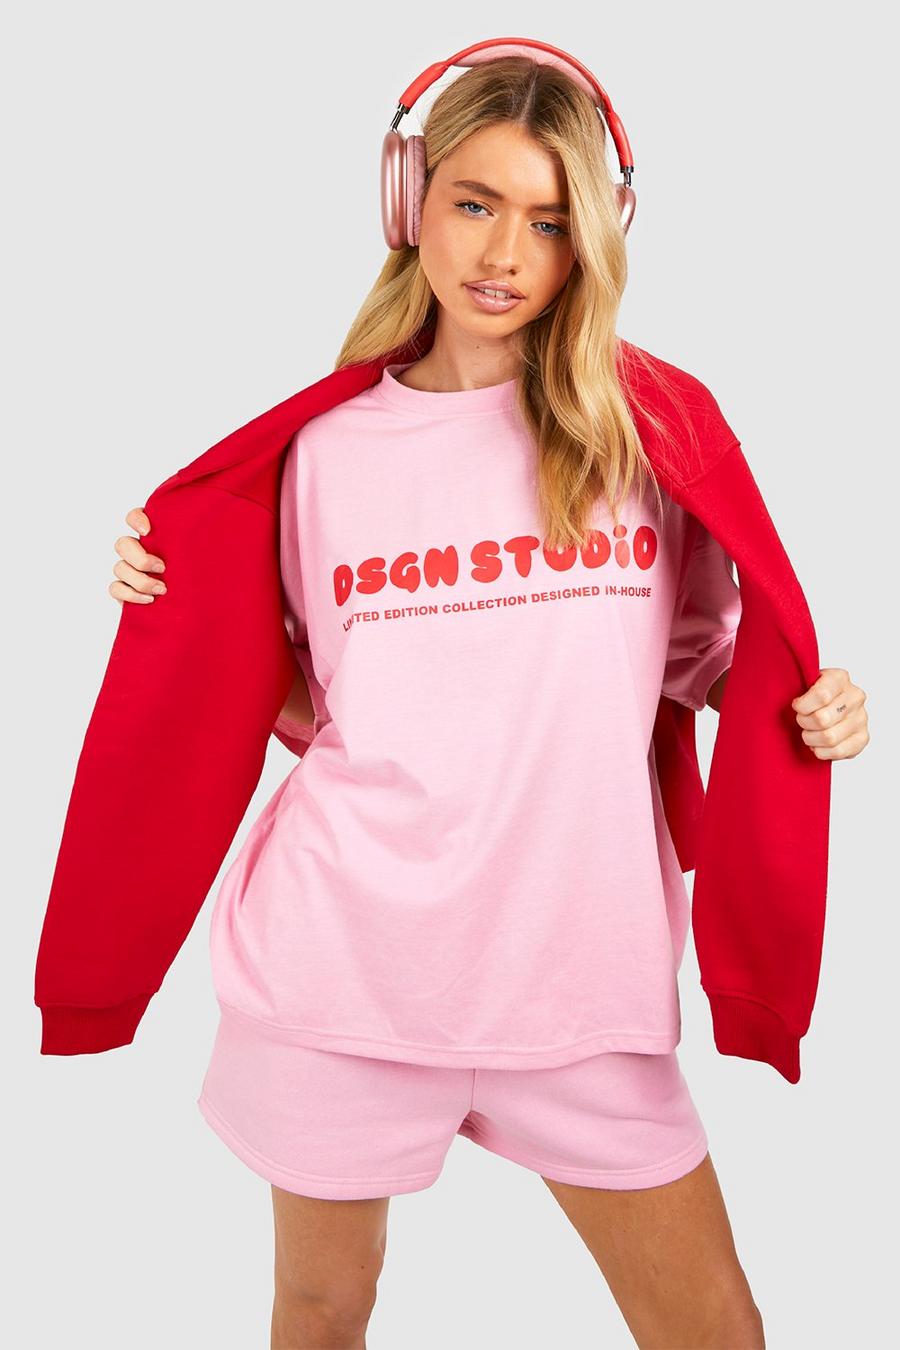 T-shirt con slogan Dsgn Studio a bolle d’aria, Light pink rosa